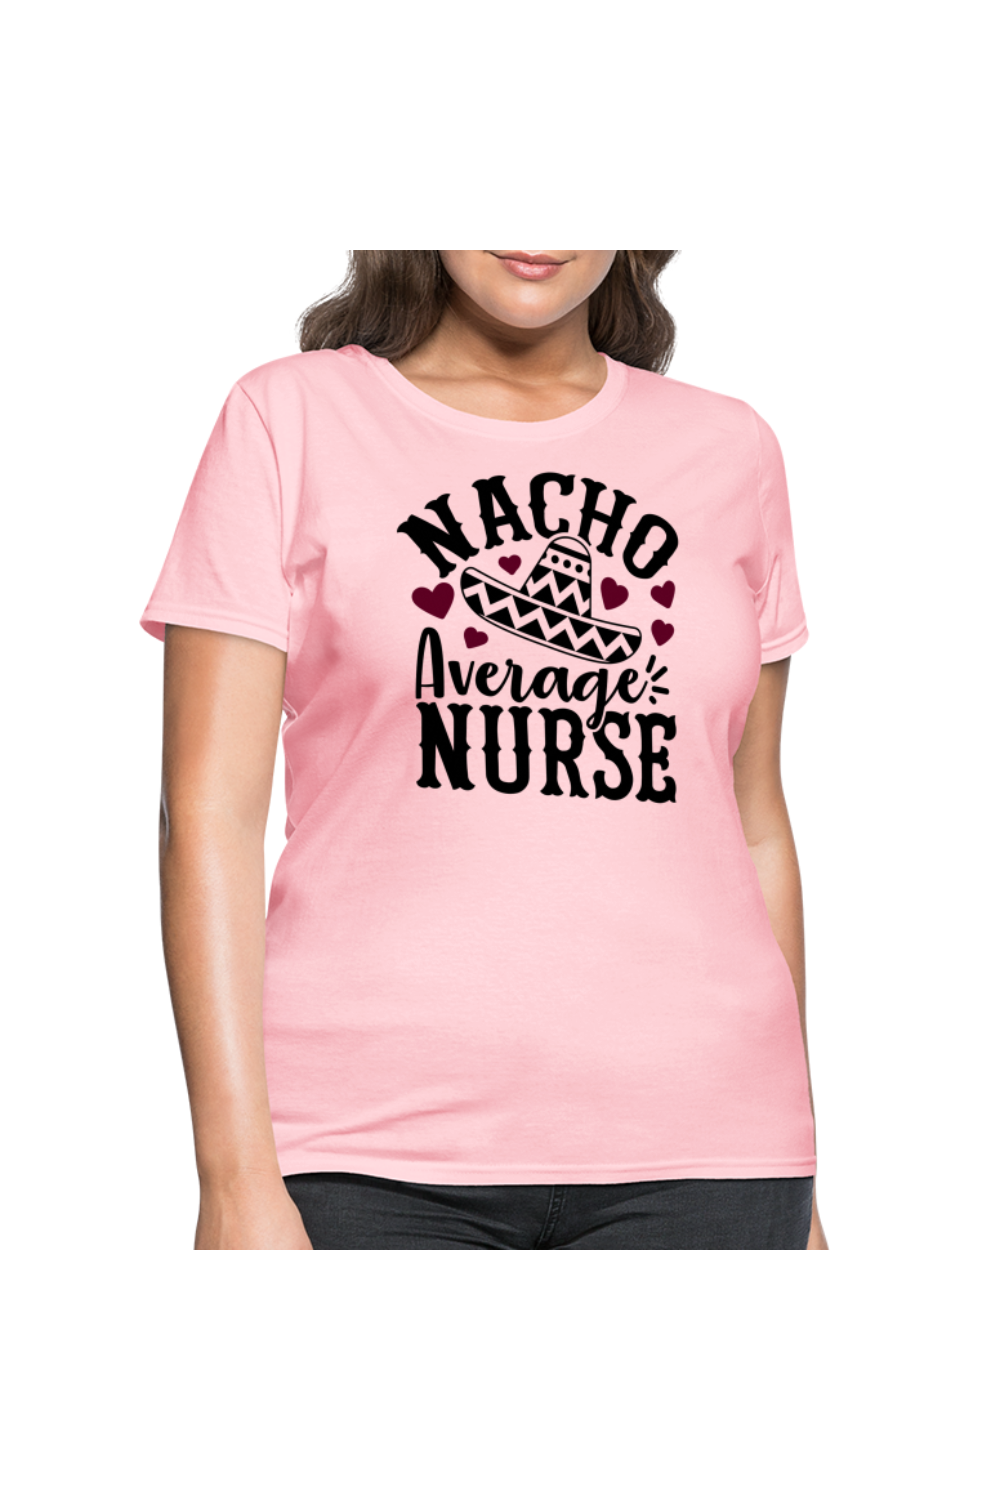 Nacho Average Nurse Women's Nurse T-Shirt - pink